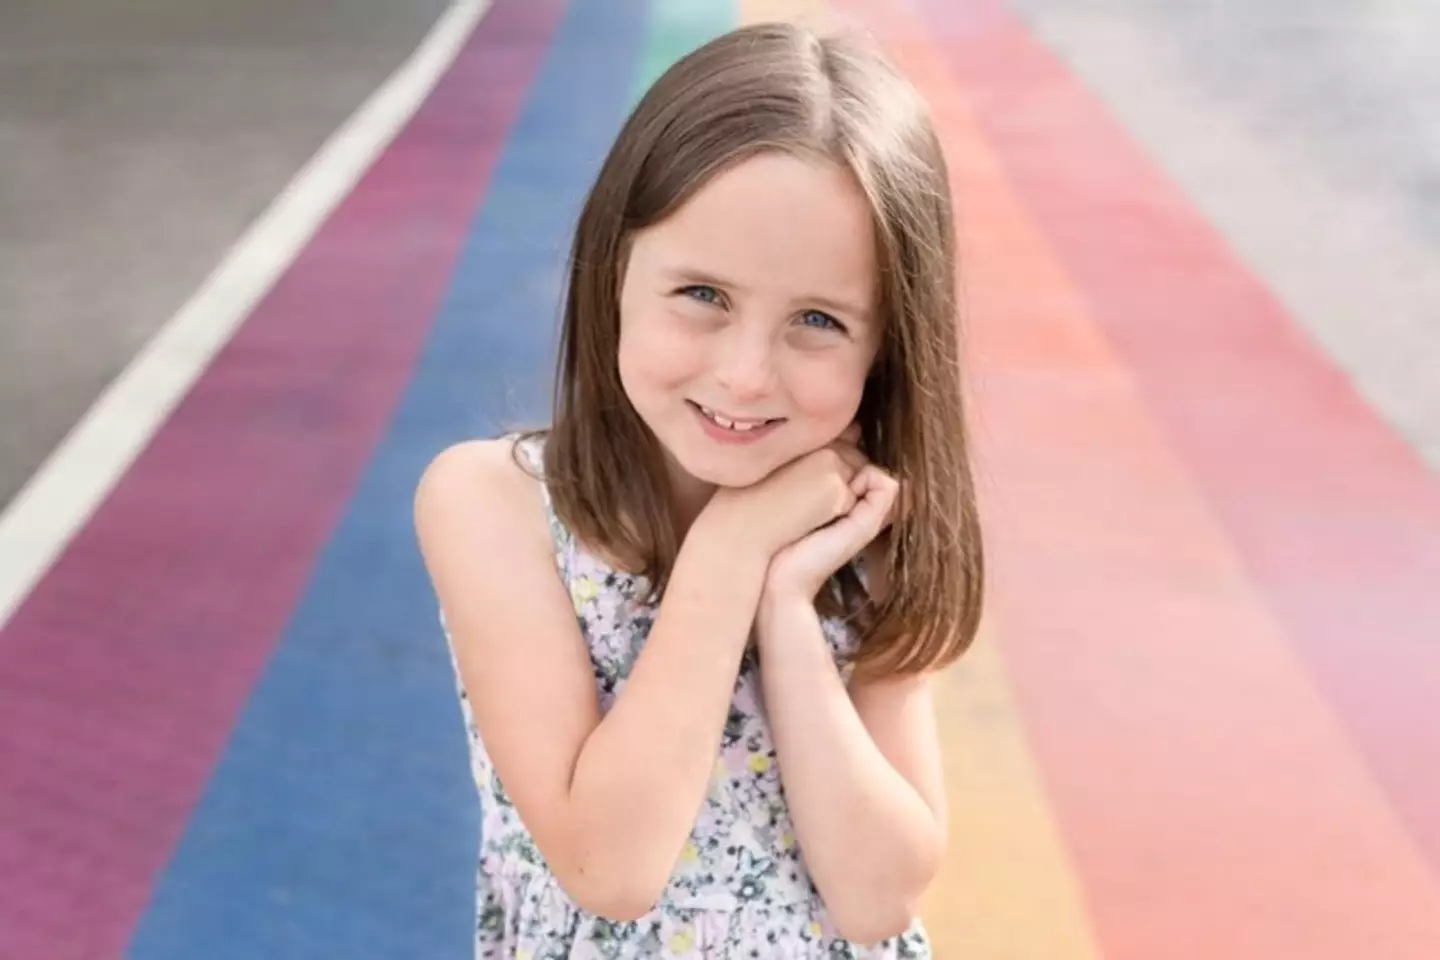 Six-year-old Ella Scott told her parents that she didn't feel like a boy.